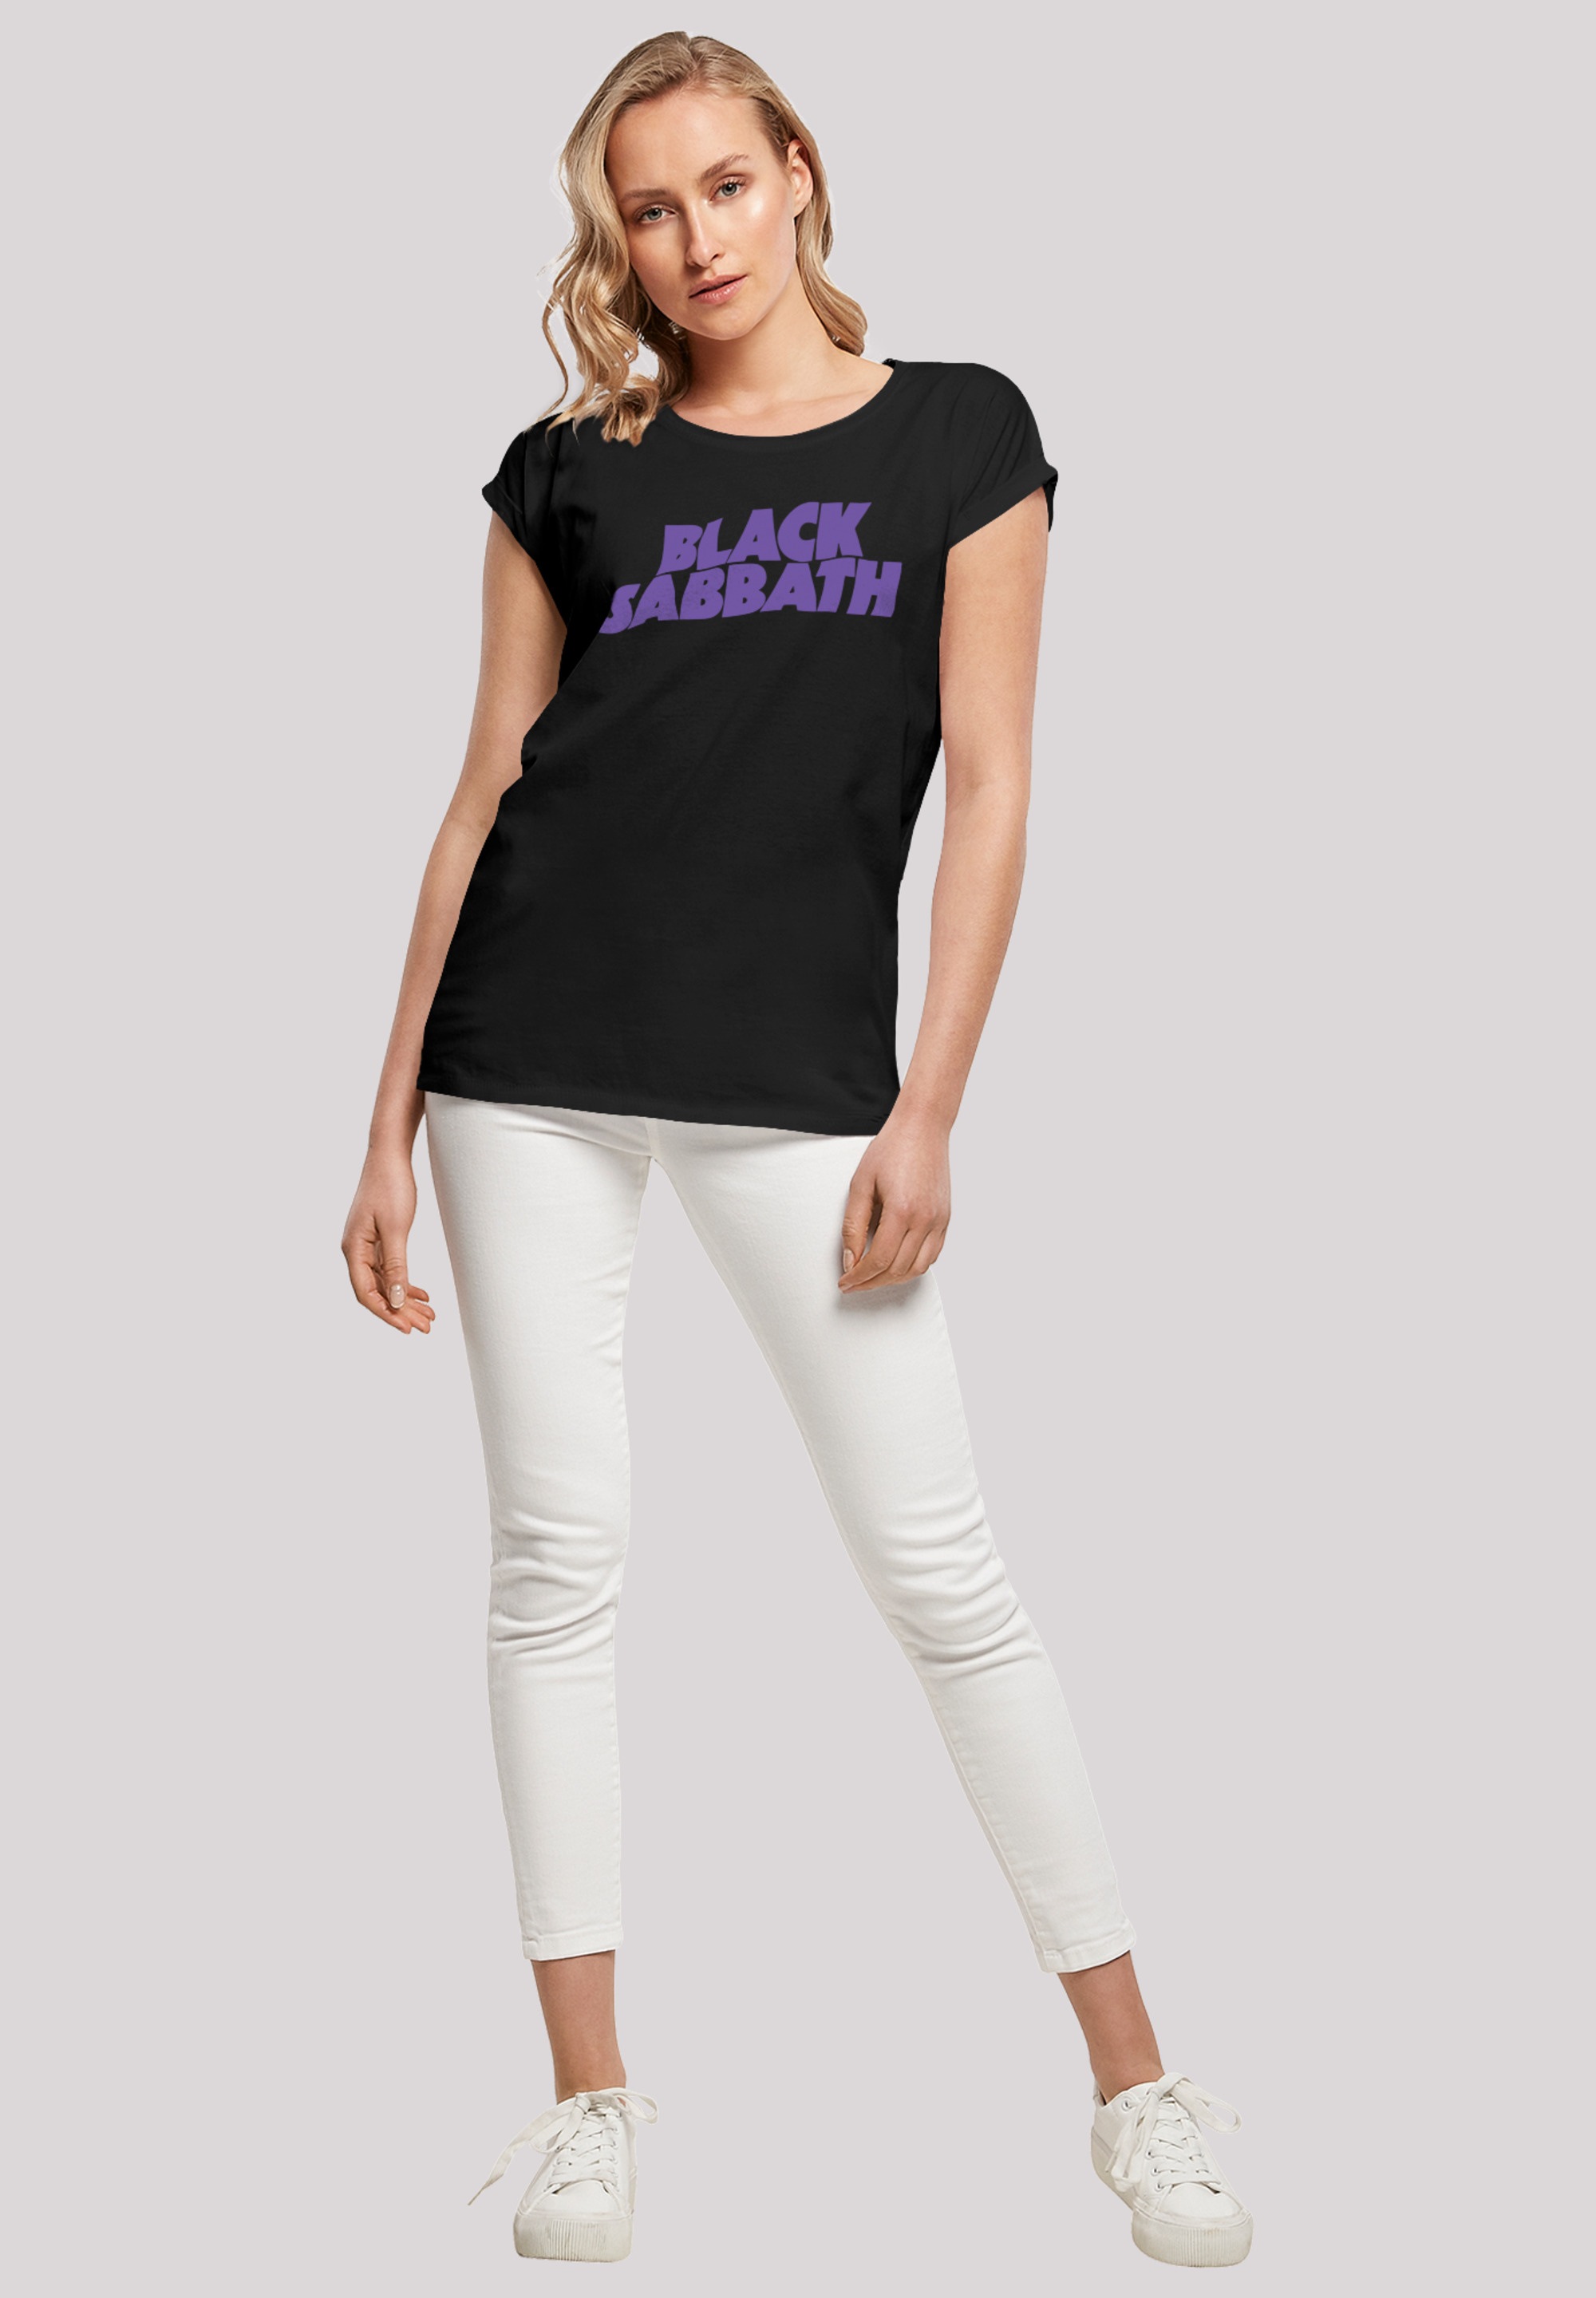 F4NT4STIC T-Shirt »Black Sabbath Logo bestellen Heavy Wavy für | Print Band BAUR Black«, Metal